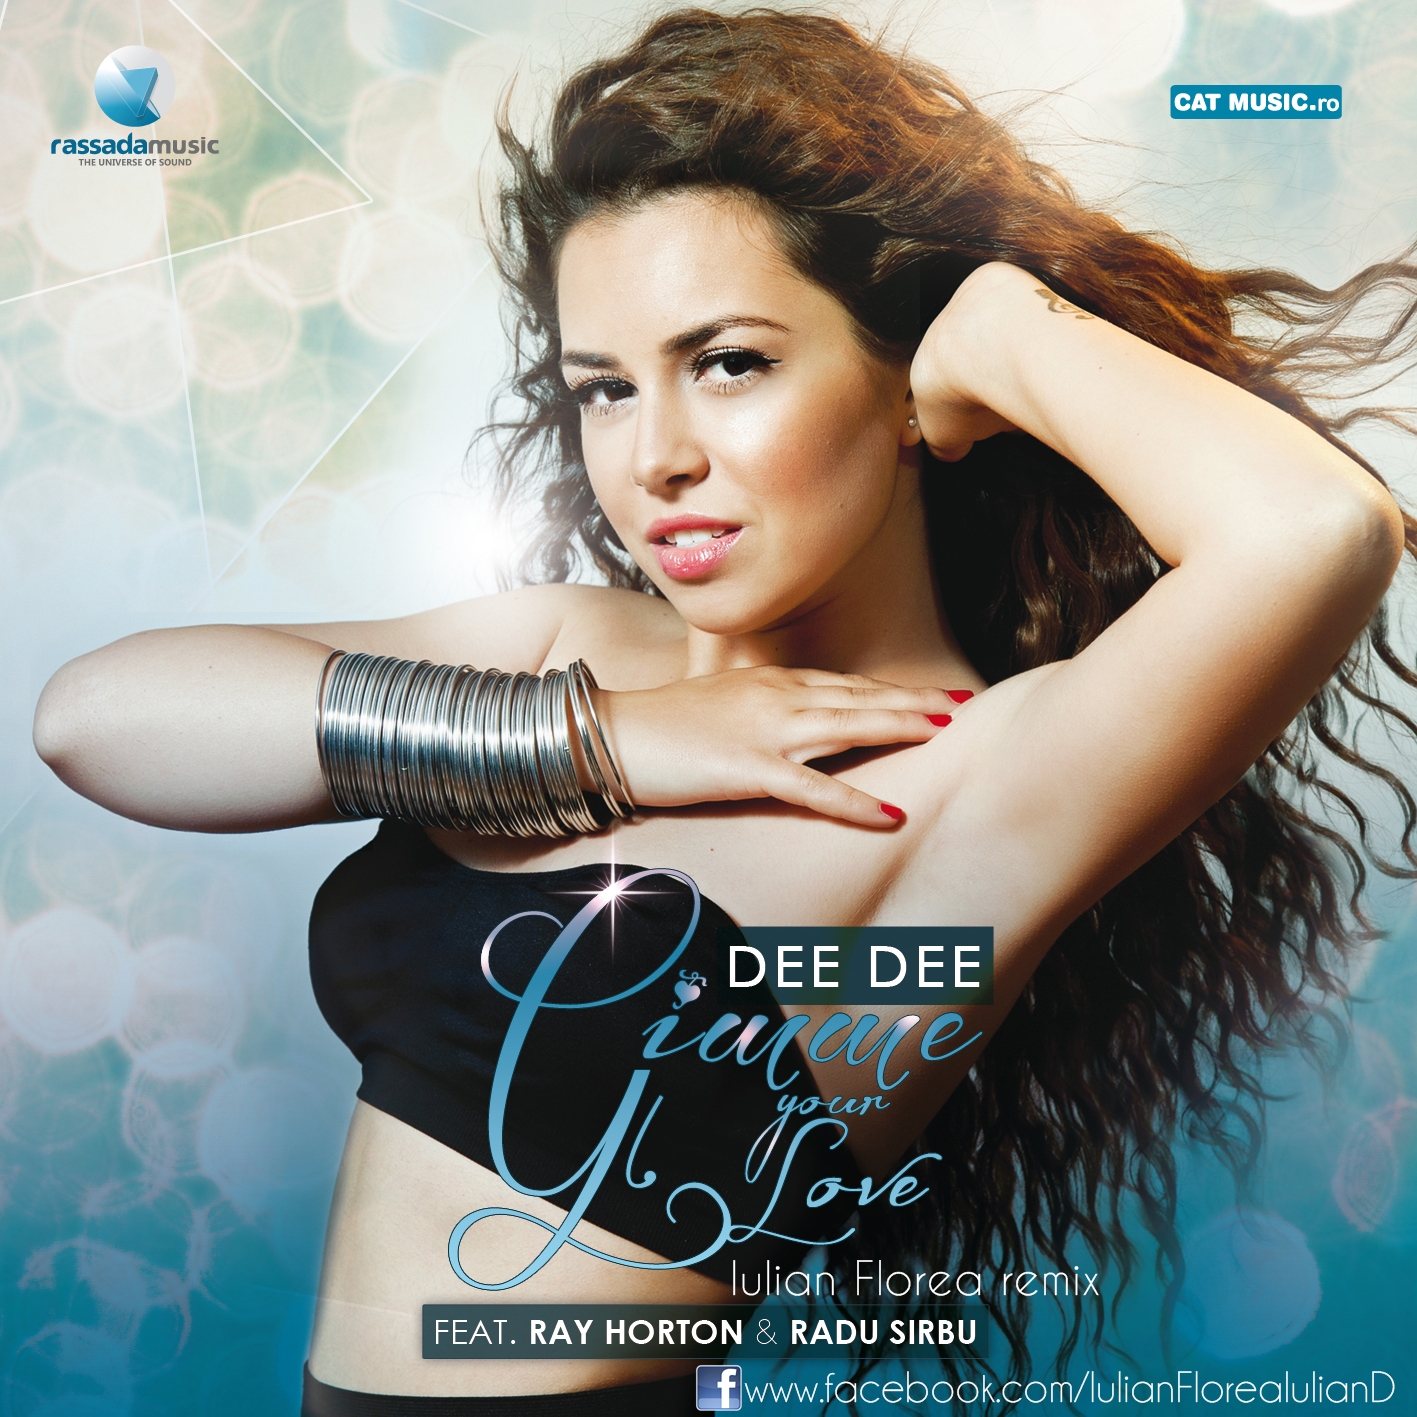 Dj dee. Dee-Dee румынская певица. DJ Dee певица фото. Dee Dee певица Википедия. Dee Dee певица Румыния Инстаграмм.